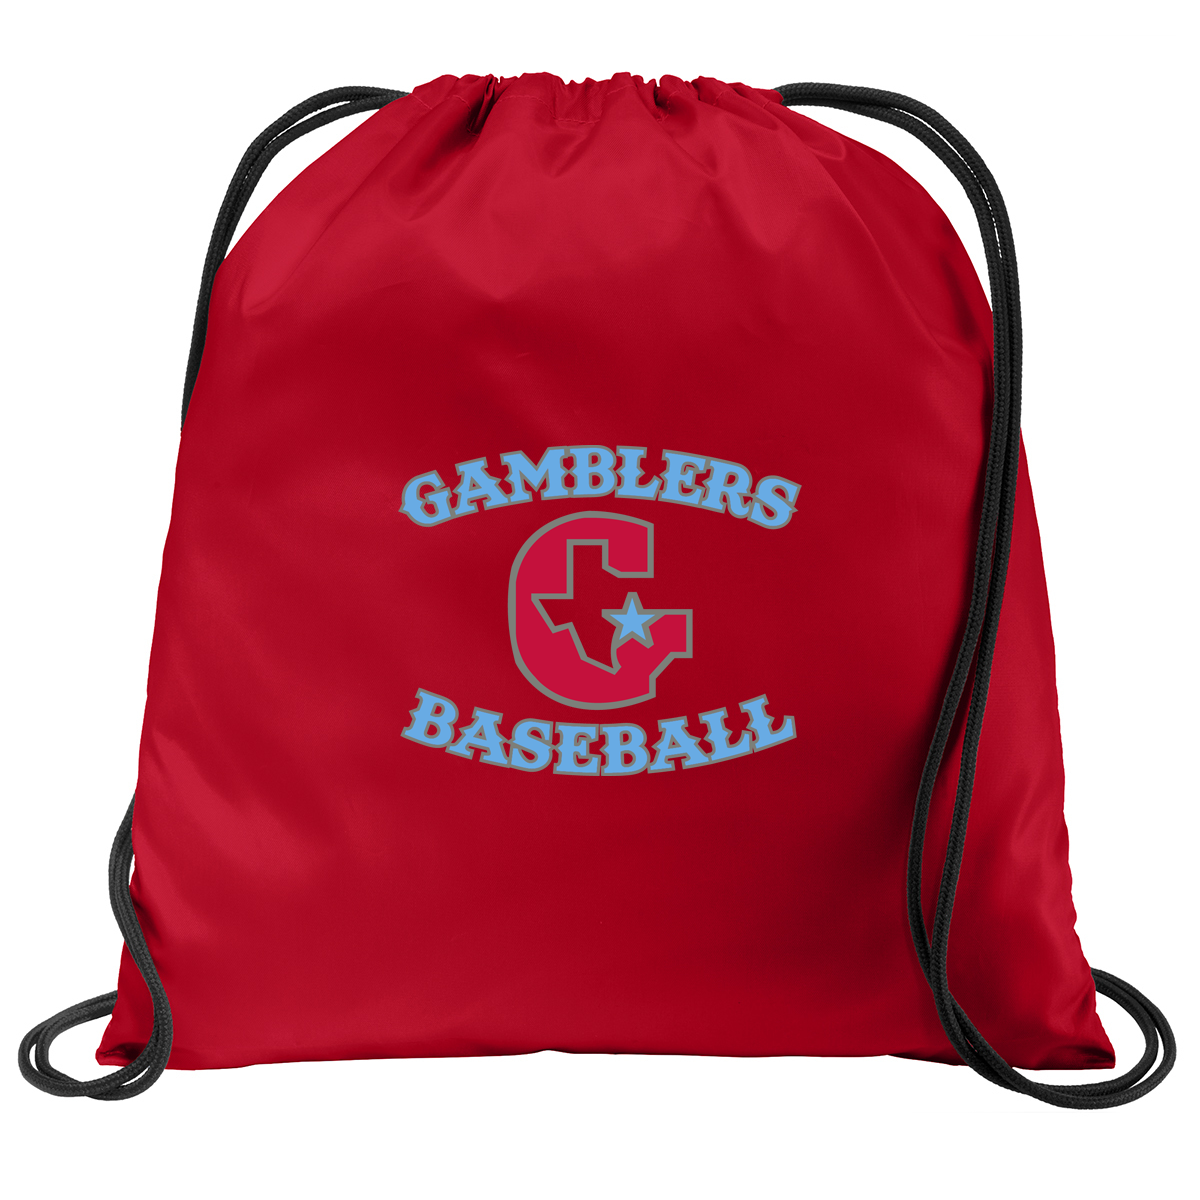 Gamblers Baseball  Cinch Pack